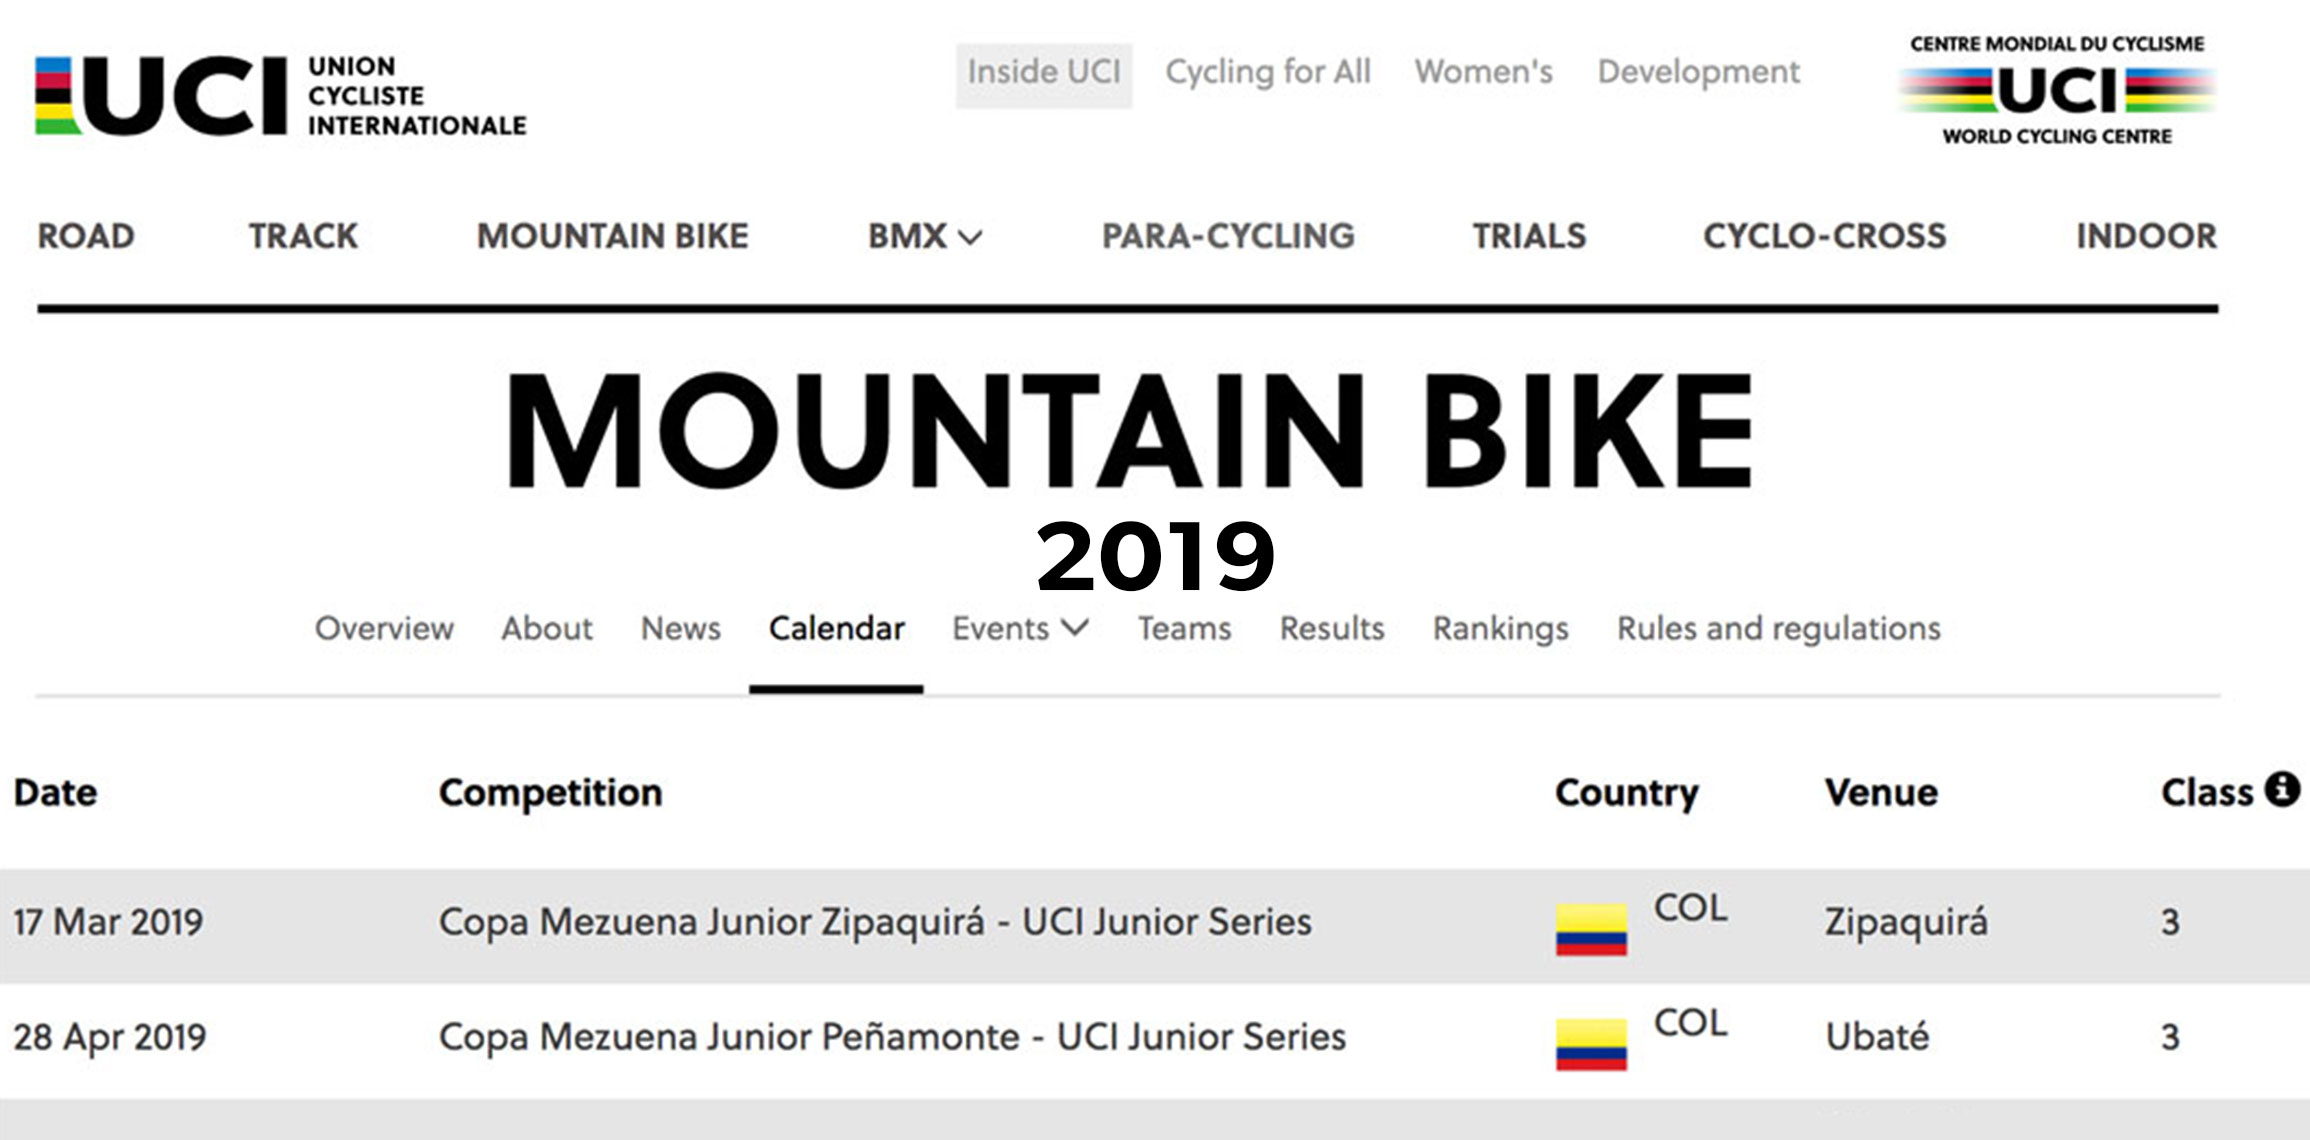 Calendario Oficial Copa Mezuena 2019 con dos Validas UCI